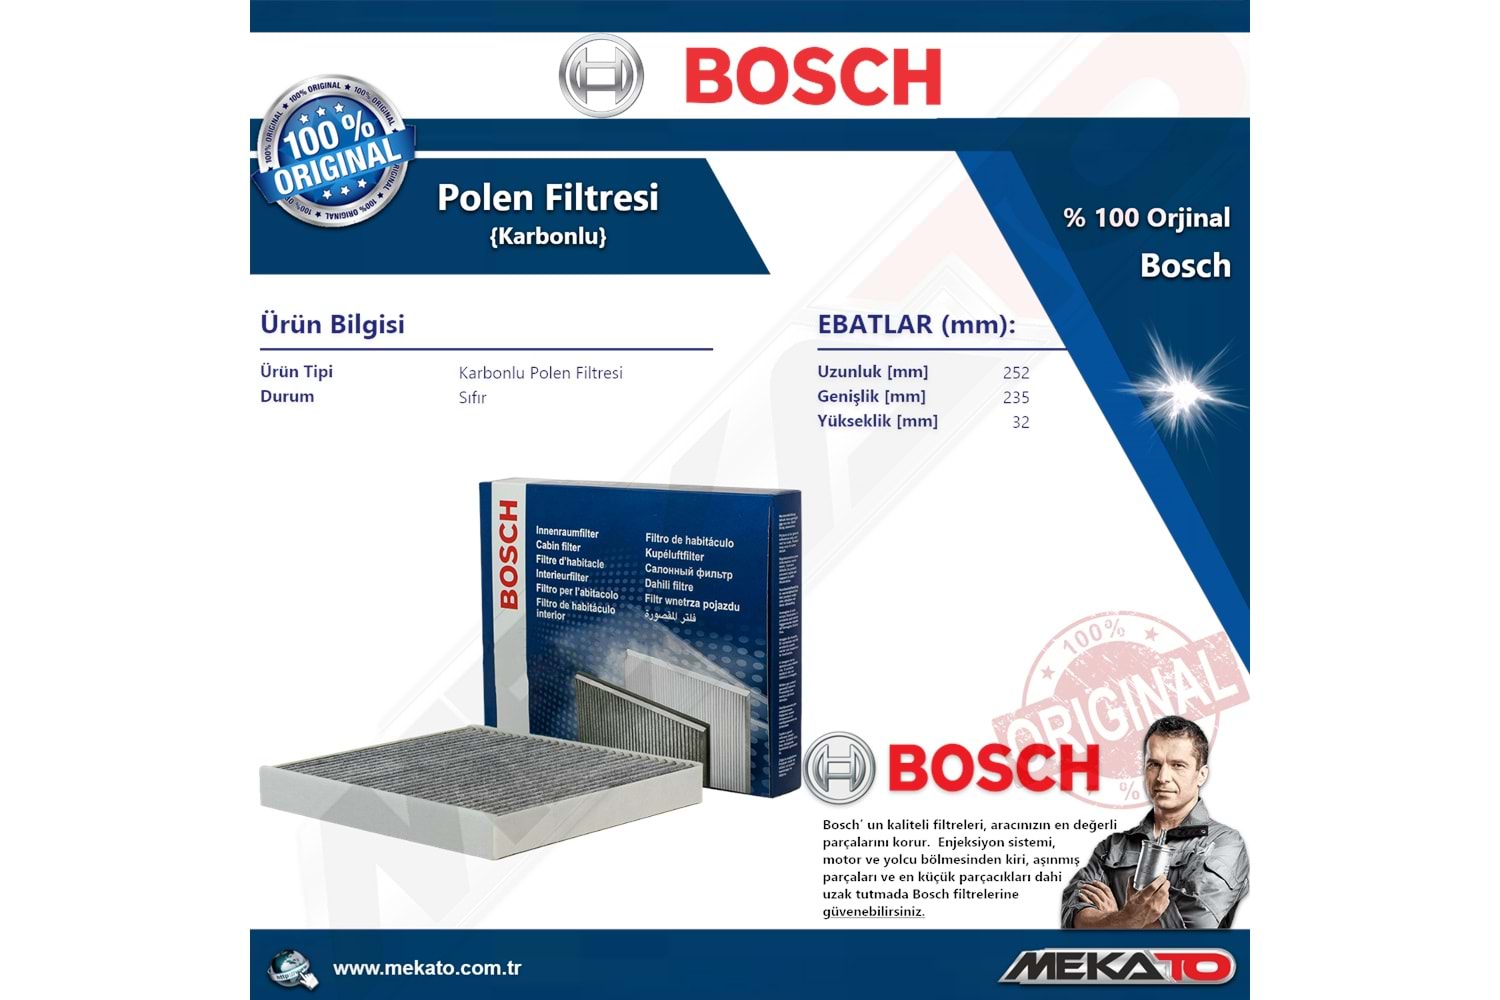 Vw Golf 7 2.0 TSI 3 Lü Bosch Karbonlu Filtre Seti 2014-2019